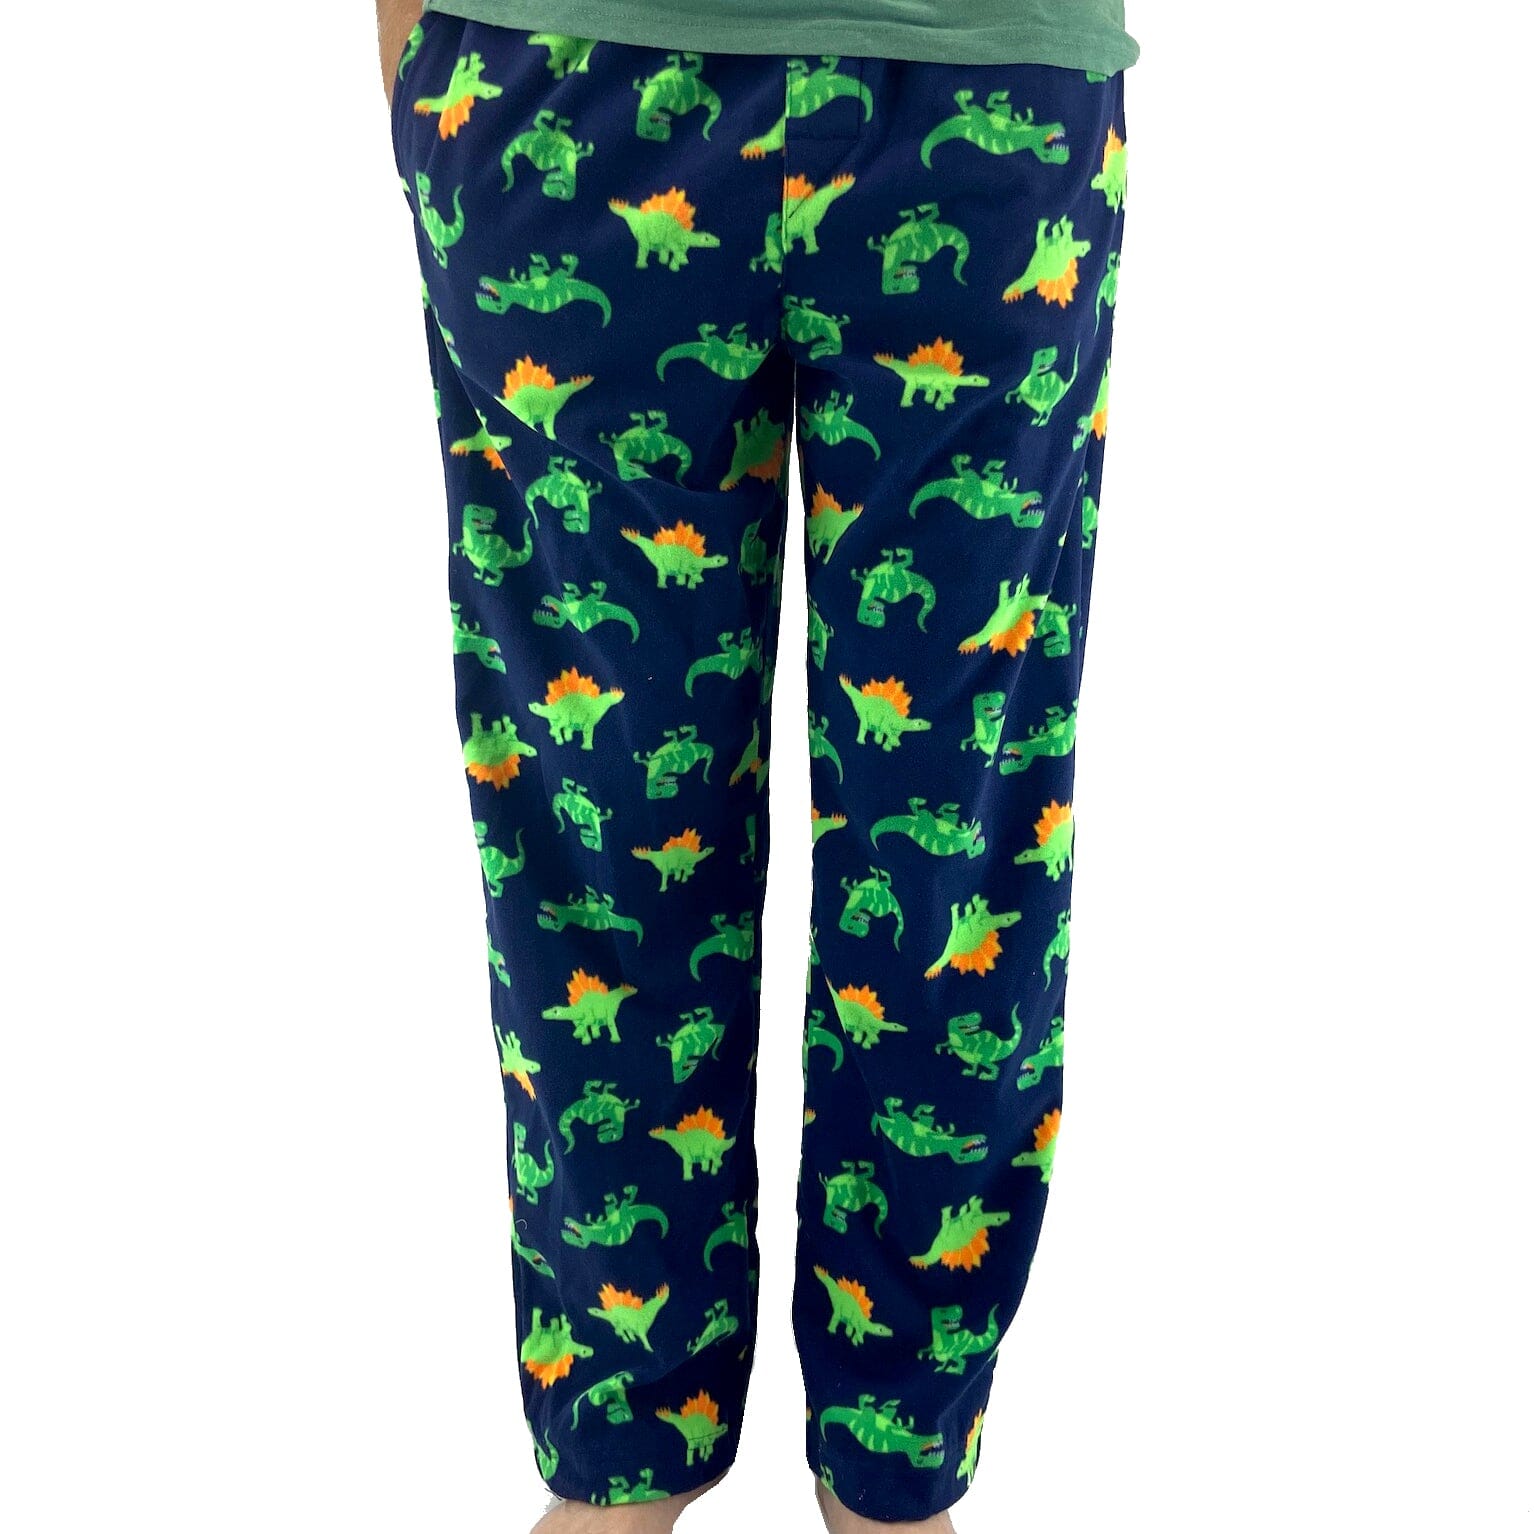 Men's Comfy Sleepwear Dinosaur Novelty Print Soft Fleece Pajama Pants